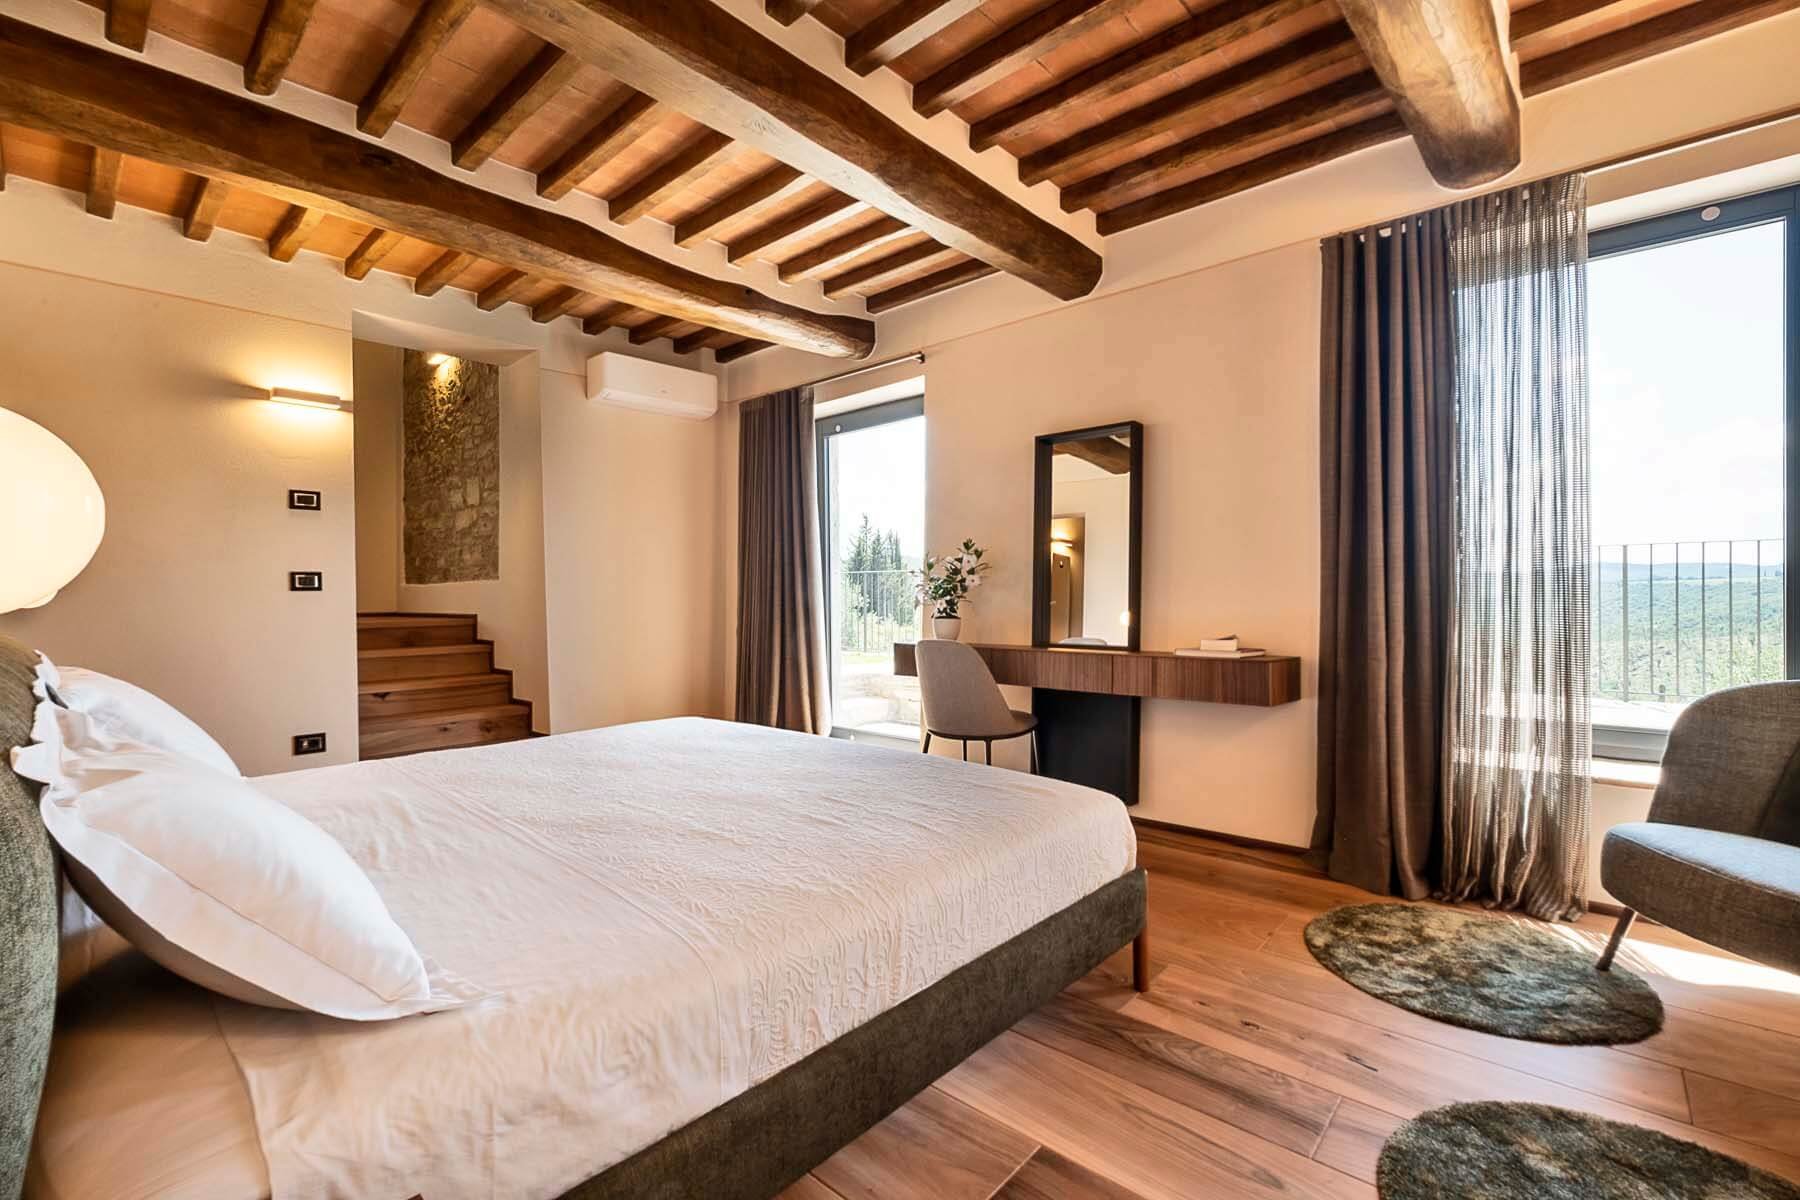 Francis York Luxury Villa Rental in the Tuscan Hills Near Gaiole in Chianti 11.jpg